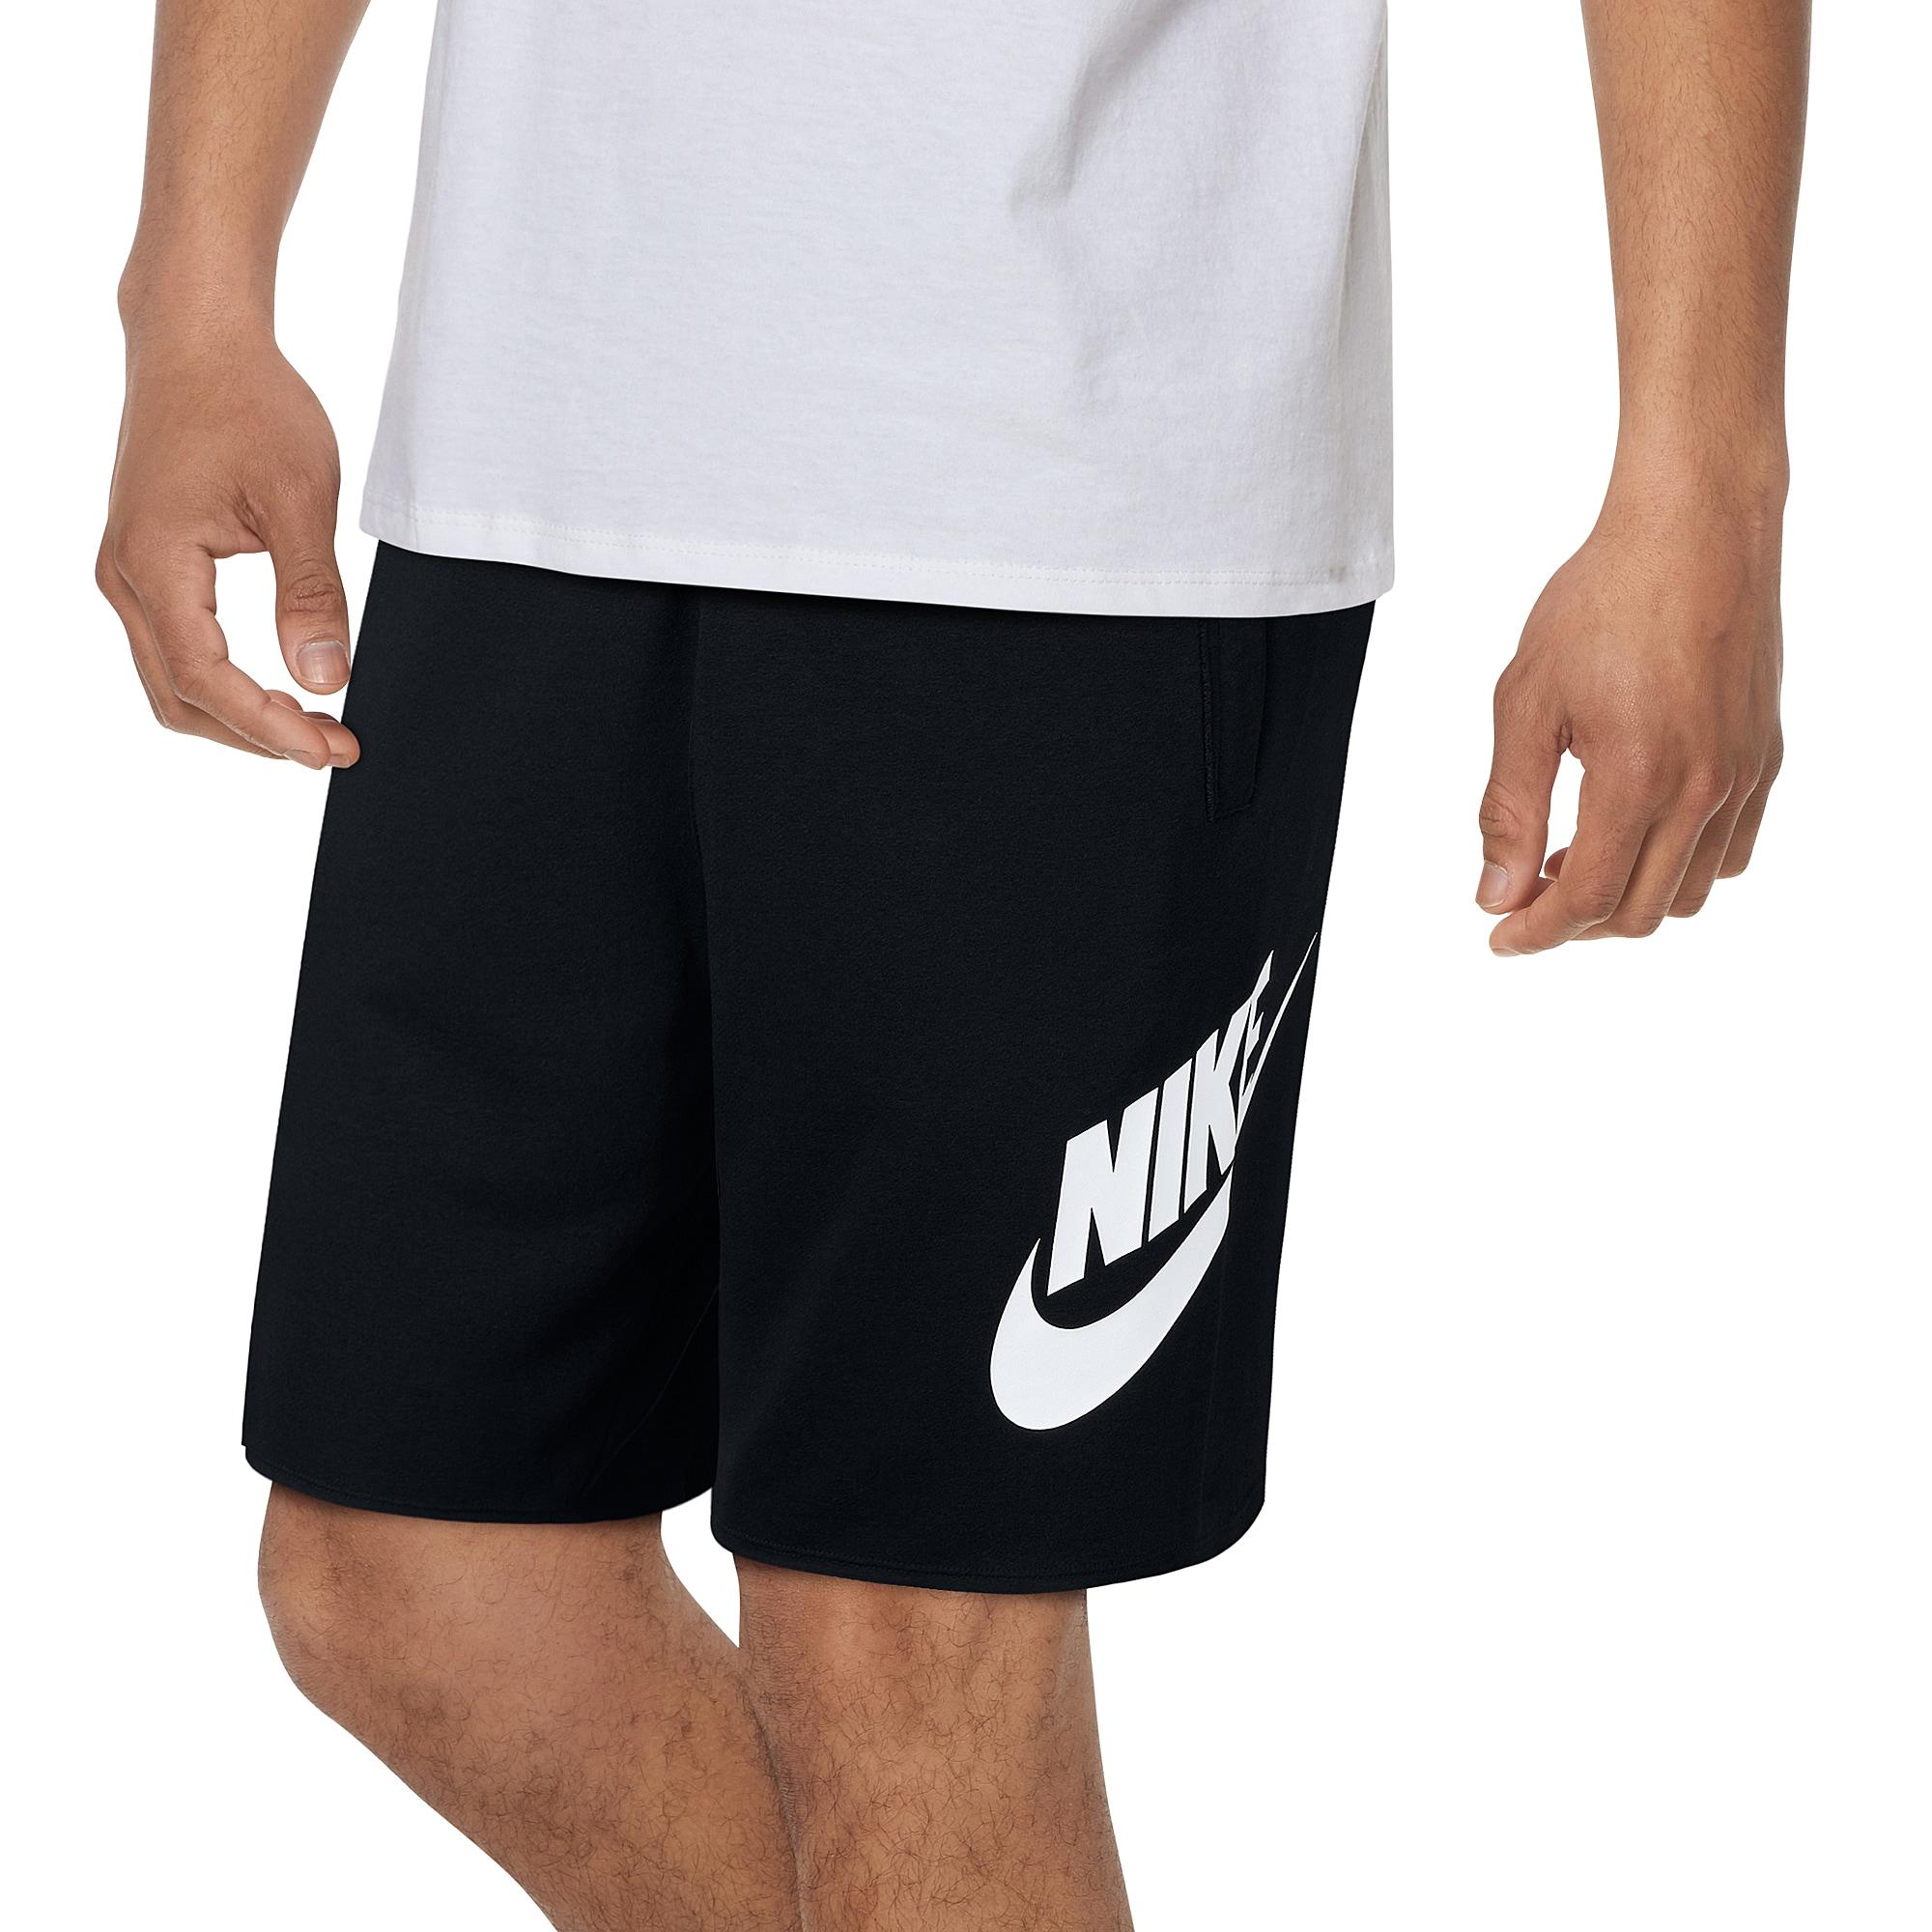 Nike Alumni Shorts in Black for Men - Lyst